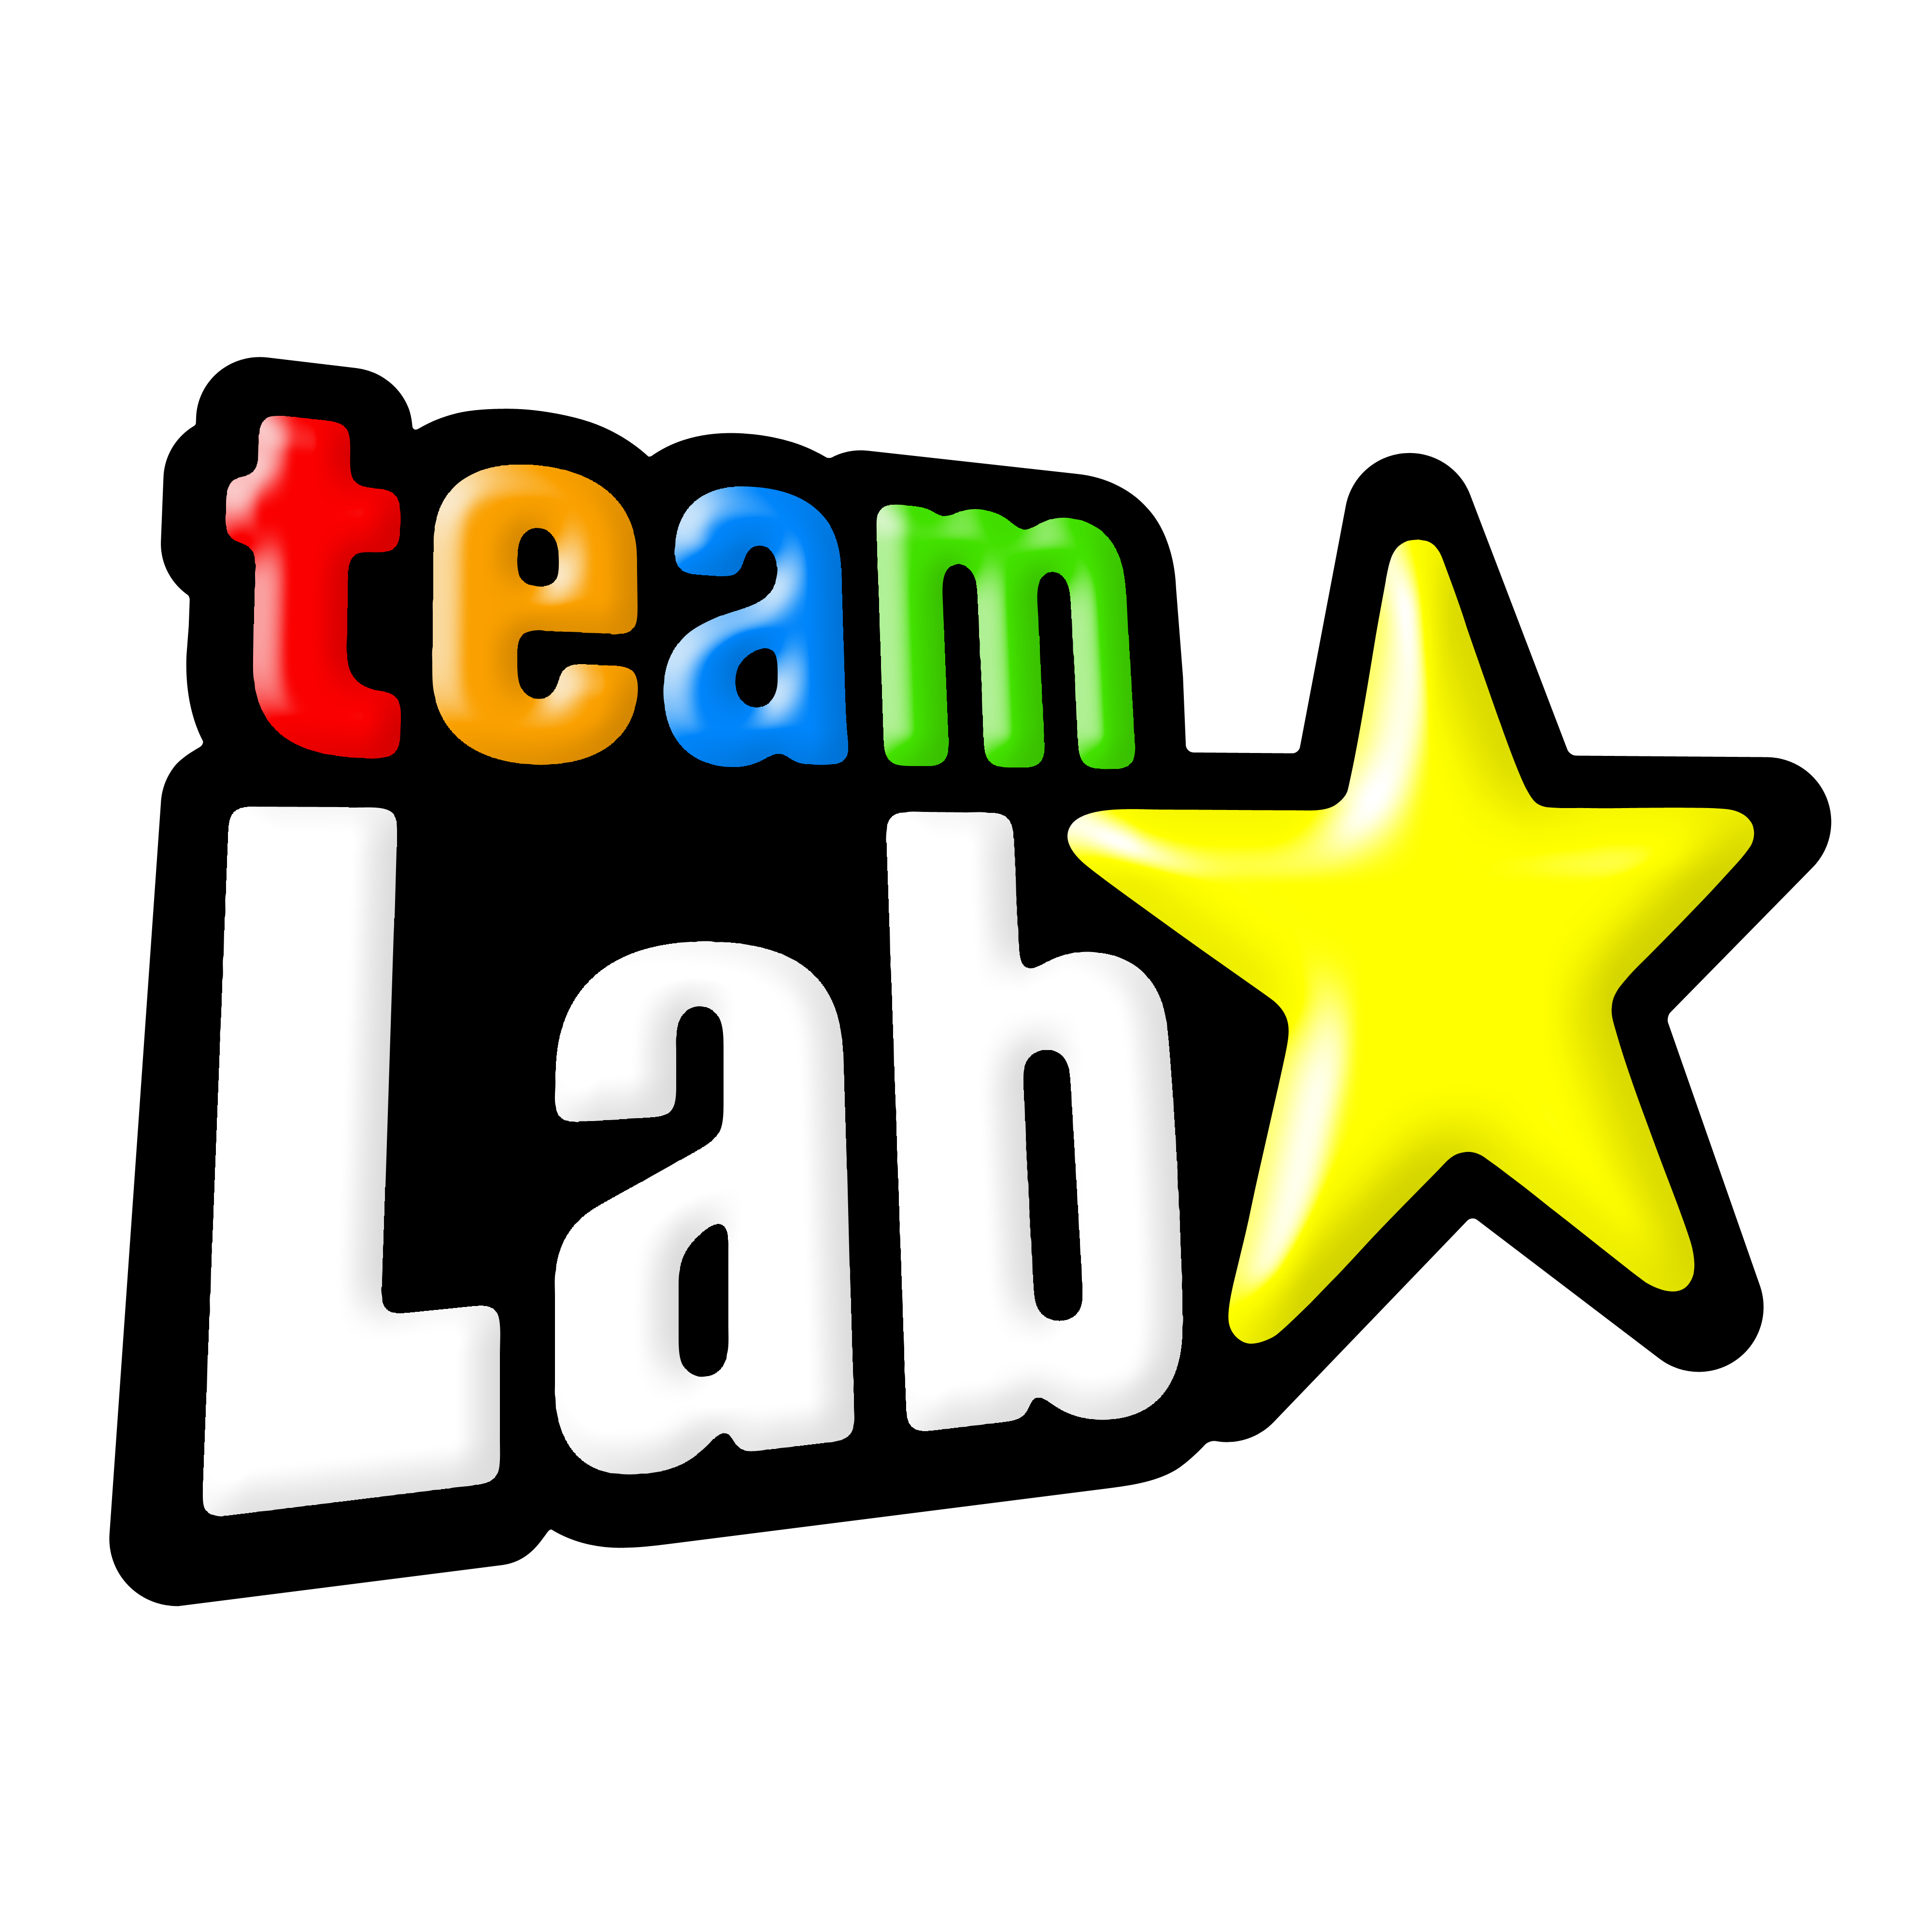 teamlab_logo